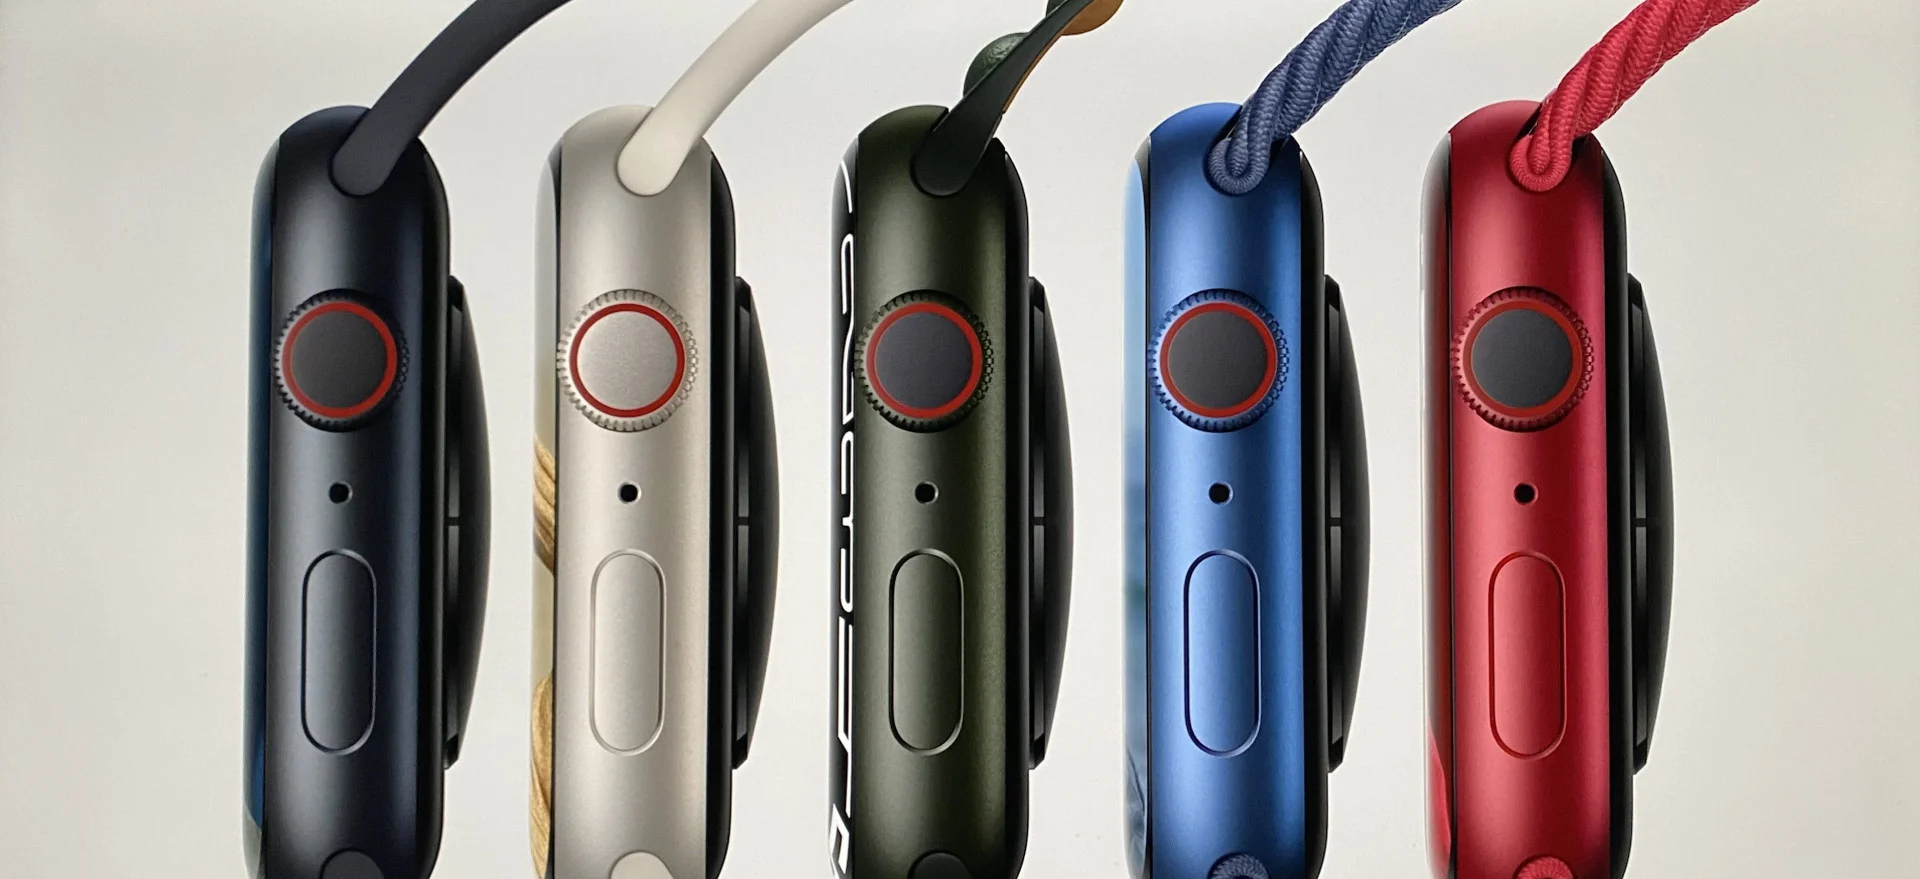 iPhone 13, iPad 9 и Apple Watch Series 7 — Apple представила новые устройства - фото 3